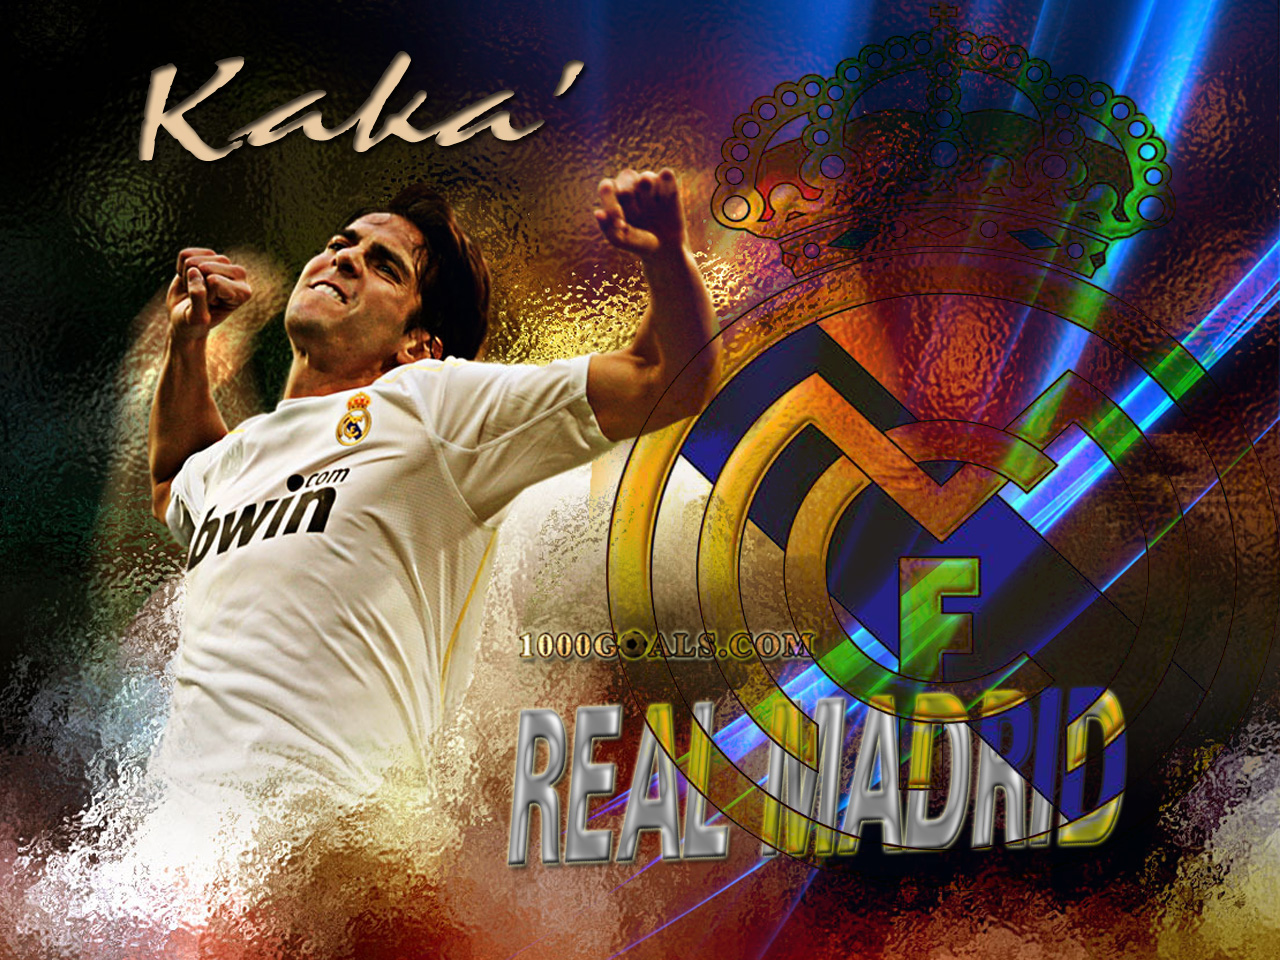 Ricardo Kaka Real Madrid Wallpaper Imagebank Biz